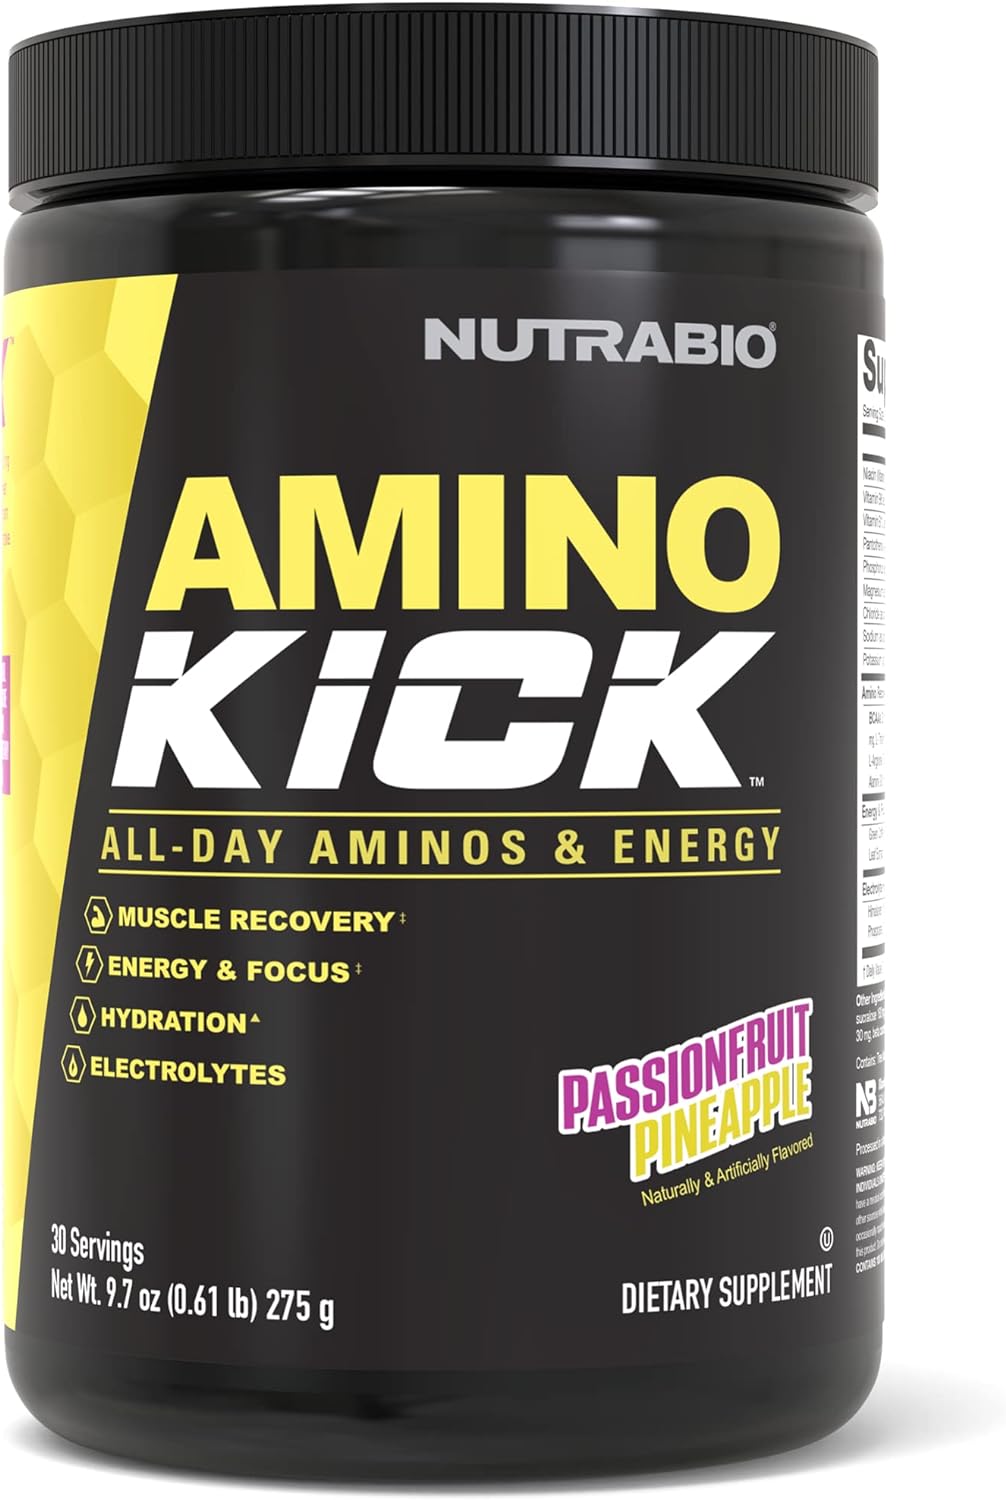 NutraBio Amino Kick - Amino Acid Energy Formula - BCAA's, Electrolytes for Hydration, Natural Caffeine- 30 Servings(Pineapple Passionfruit)